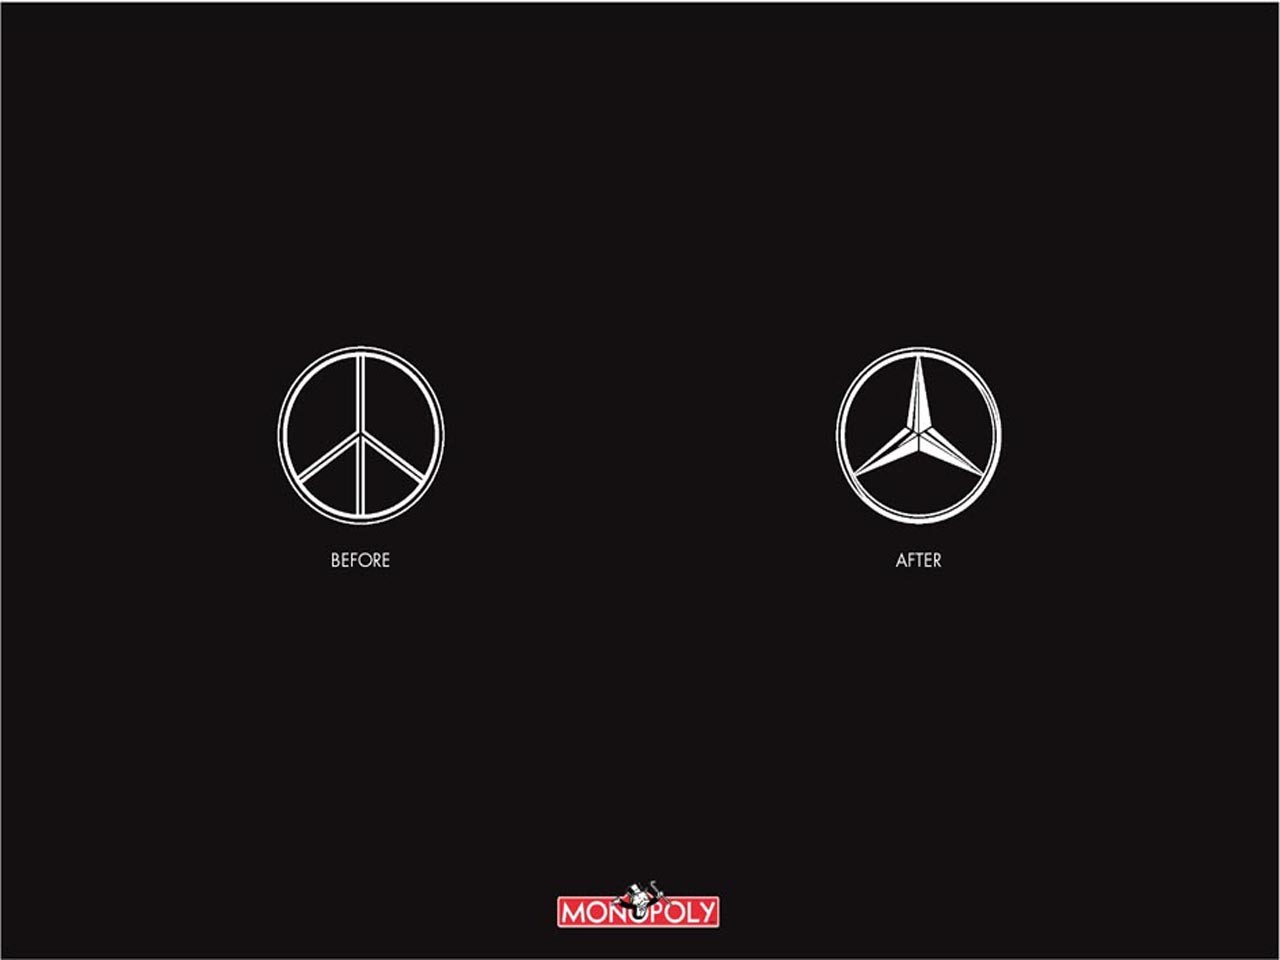 Peace Mercedes Benz Monopoly Logos Wallpaper